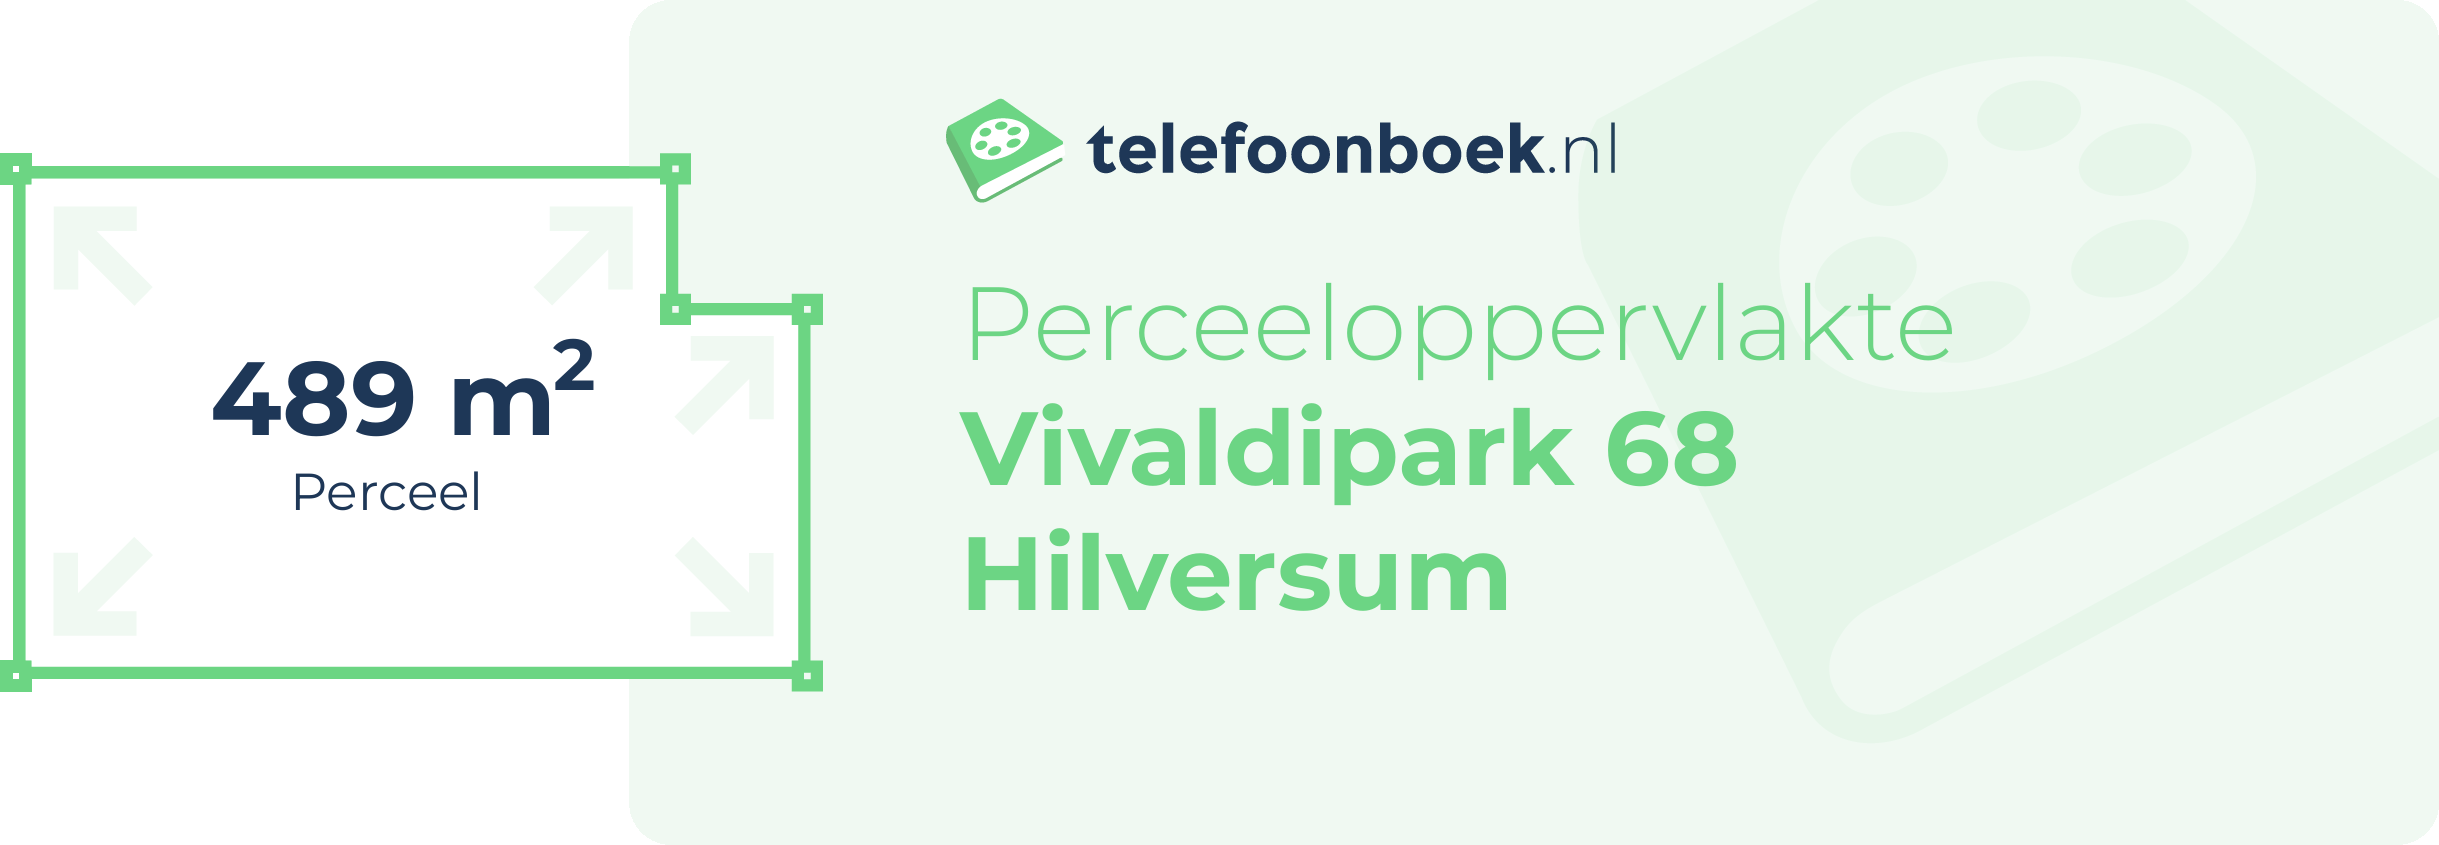 Perceeloppervlakte Vivaldipark 68 Hilversum